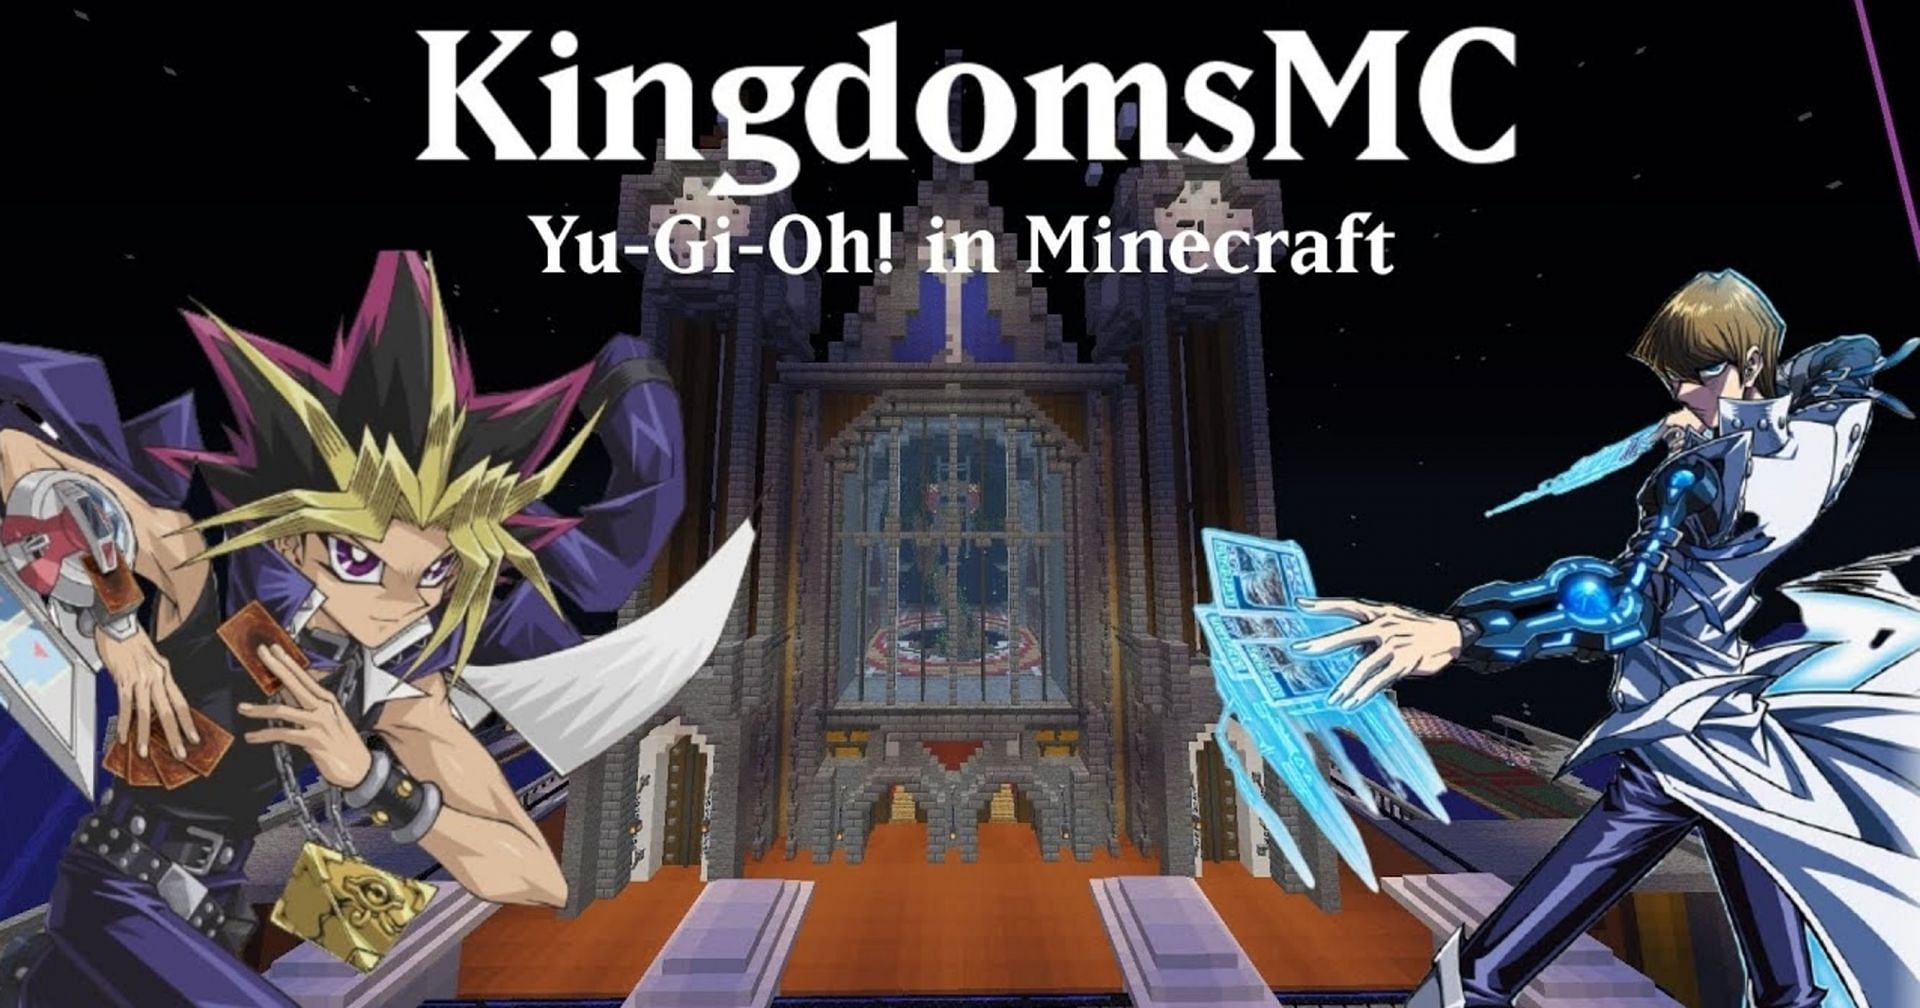 Battle for the title of King of Games in KingdomsMC (Image via KingdomsMC/PlanetMinecraft)